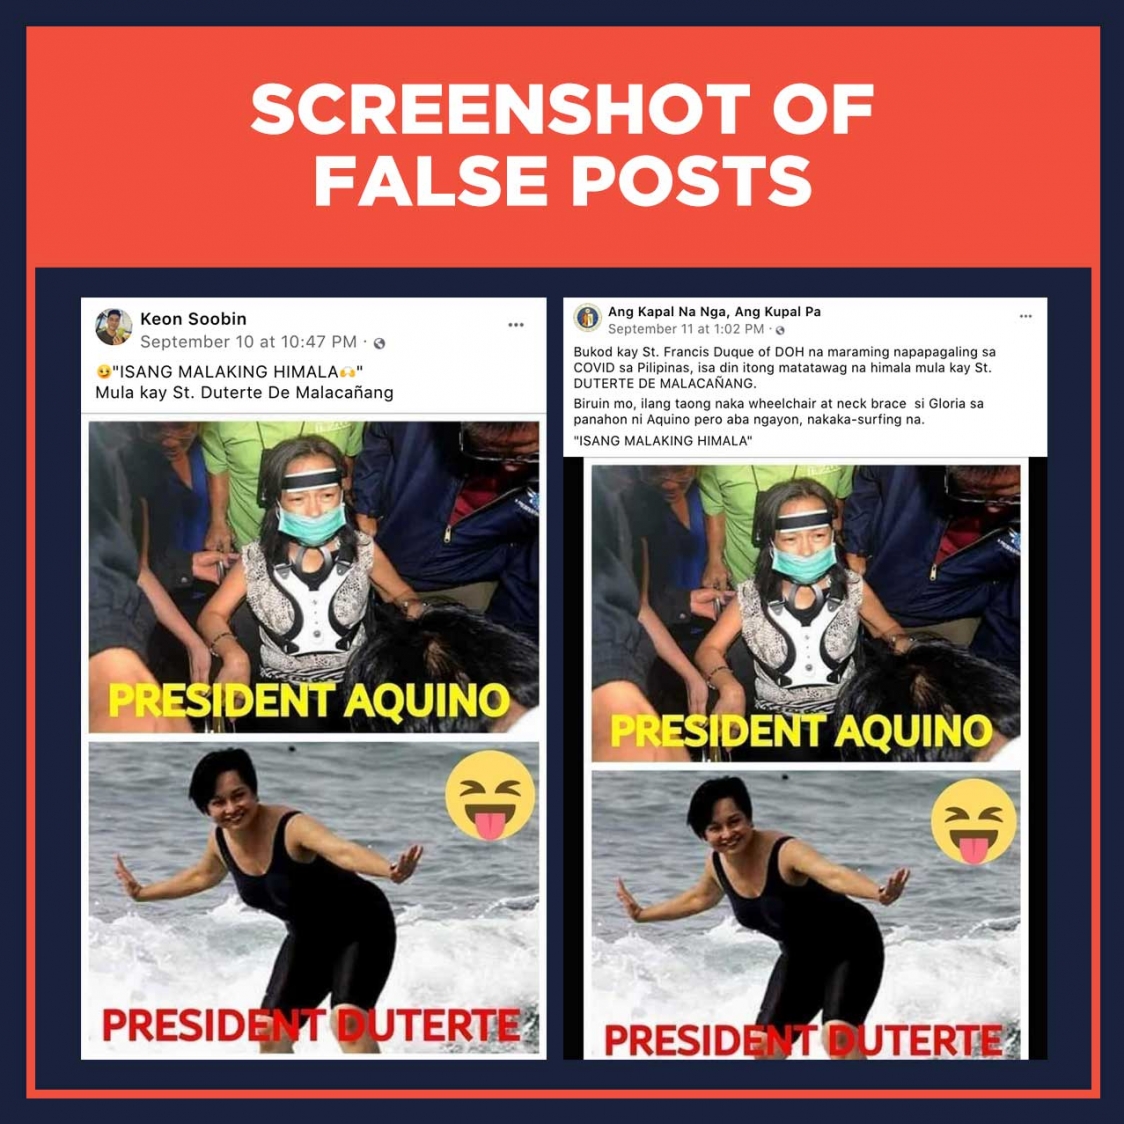 FALSE Photo of Arroyo's condition during Duterte's term